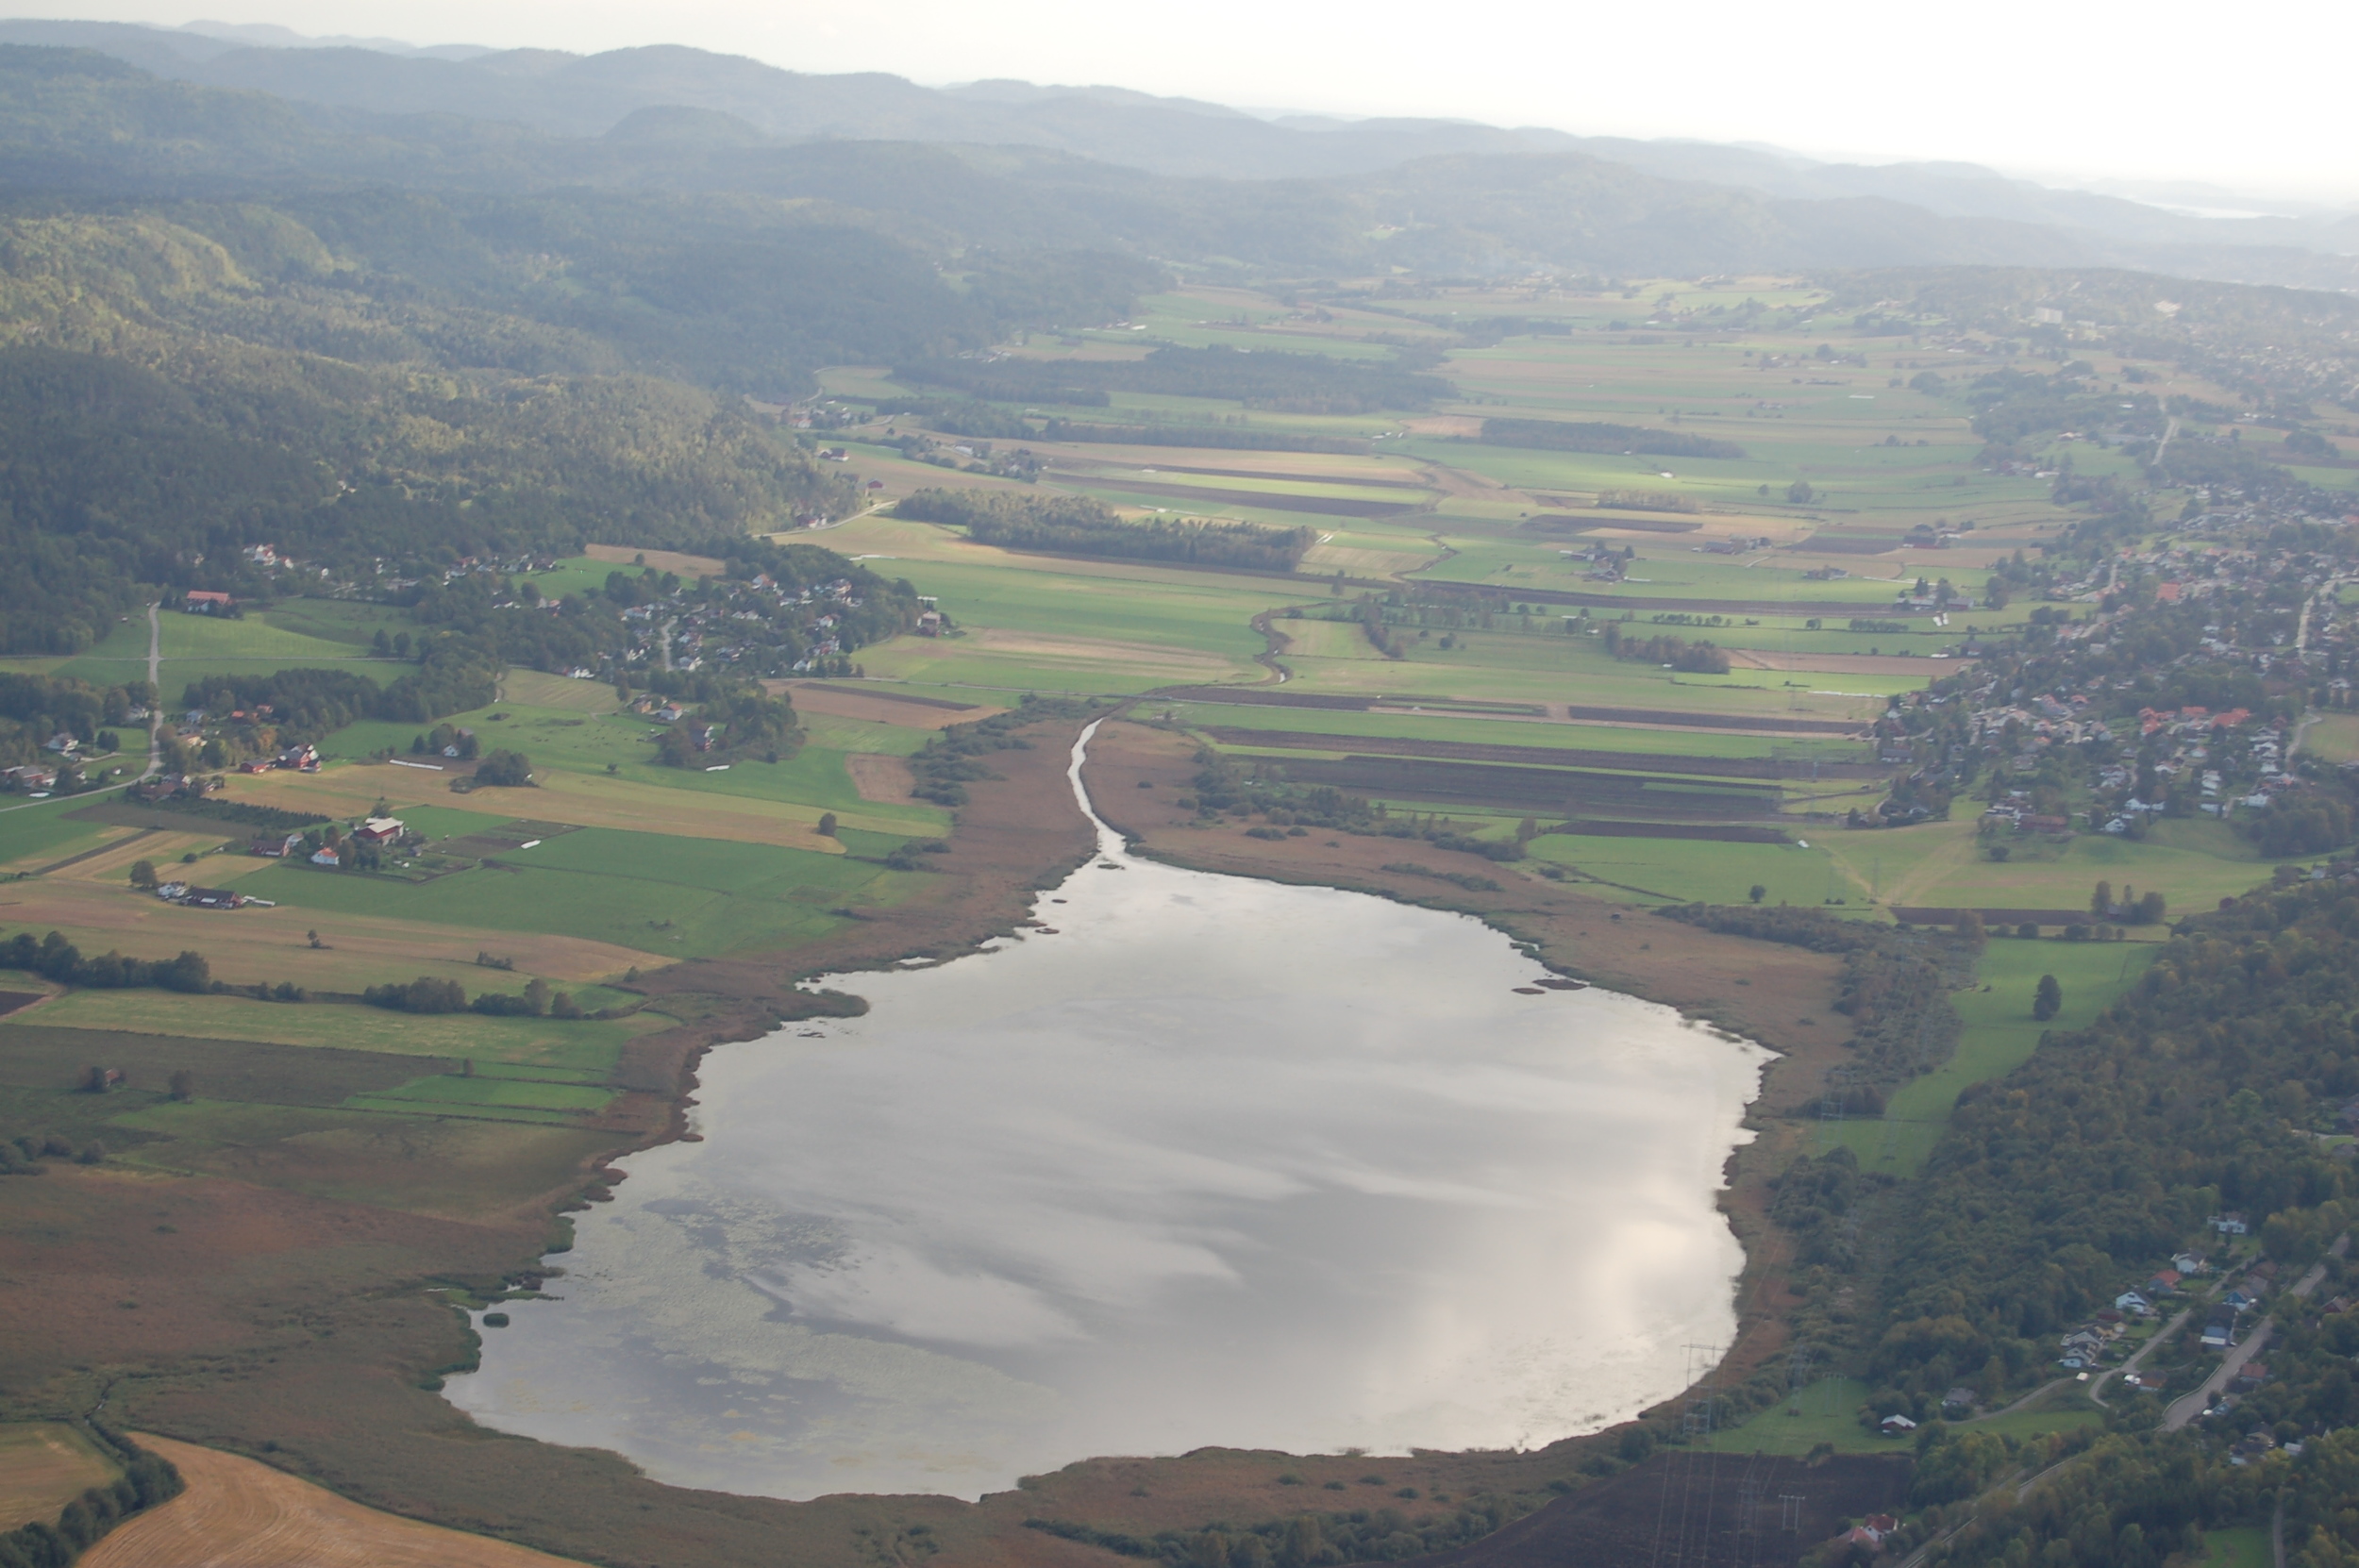  Børsesjø er eneste innsjø i området og vernet som naturreservat 